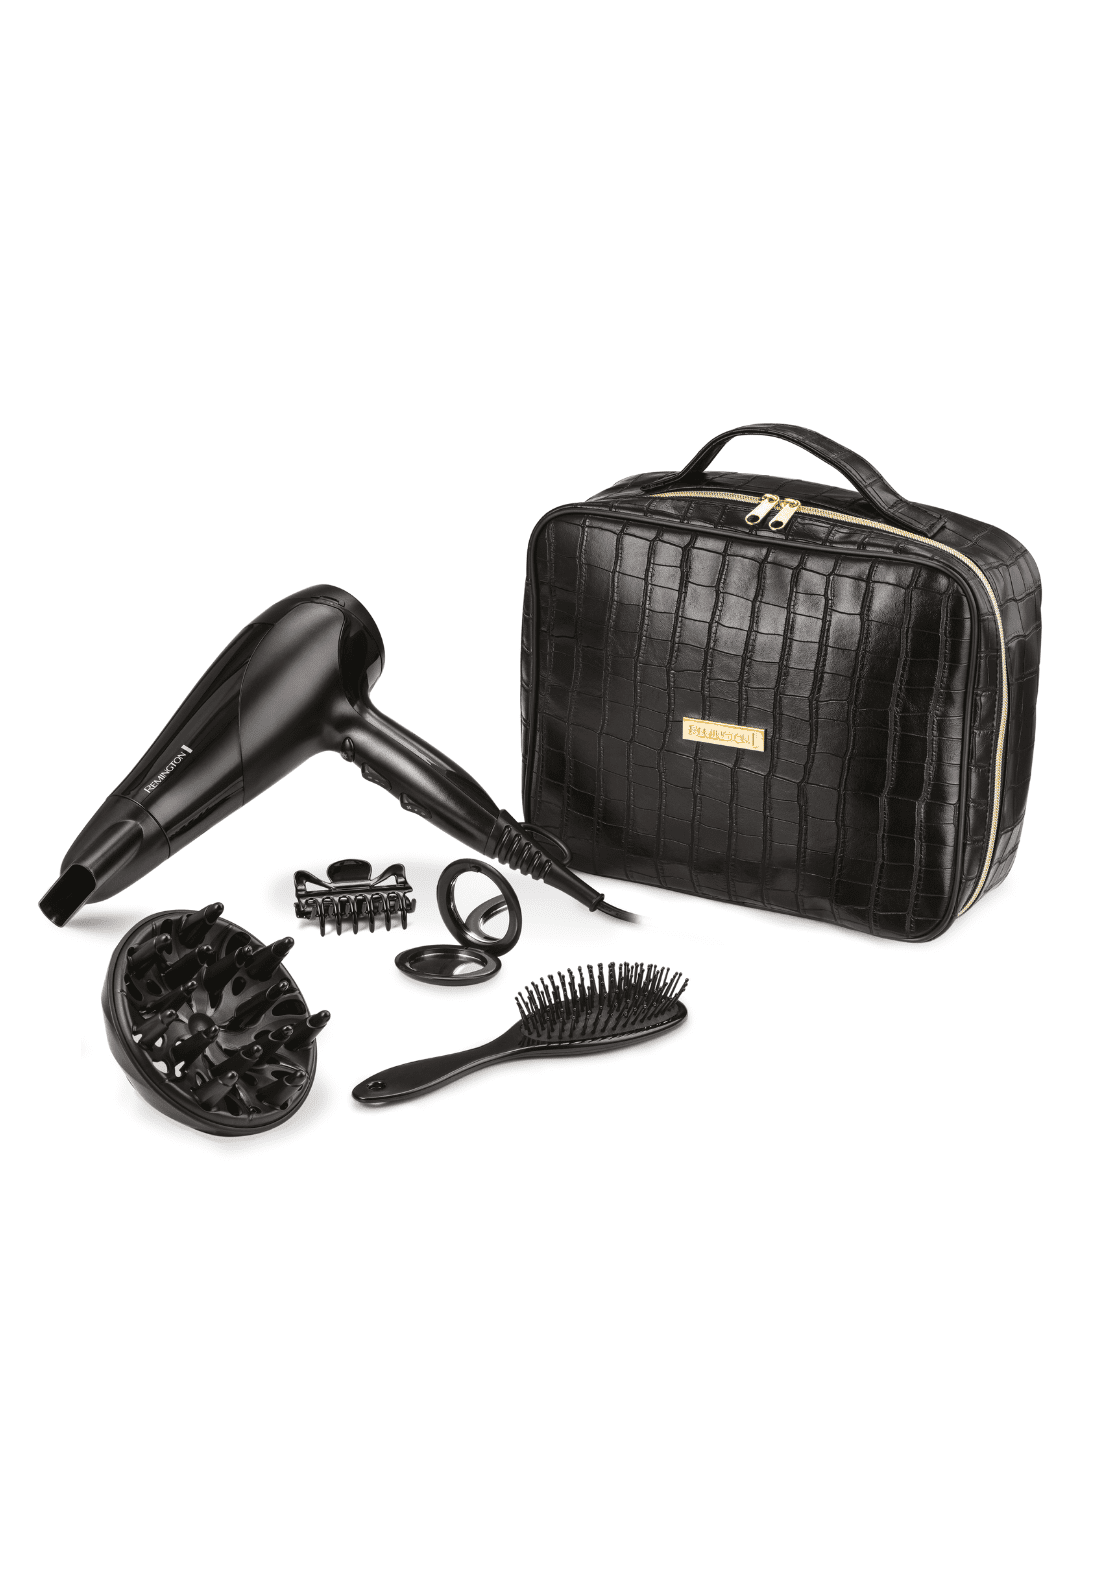 Remington Style Edition Hairdryer Gift Set - Black 1 Shaws Department Stores